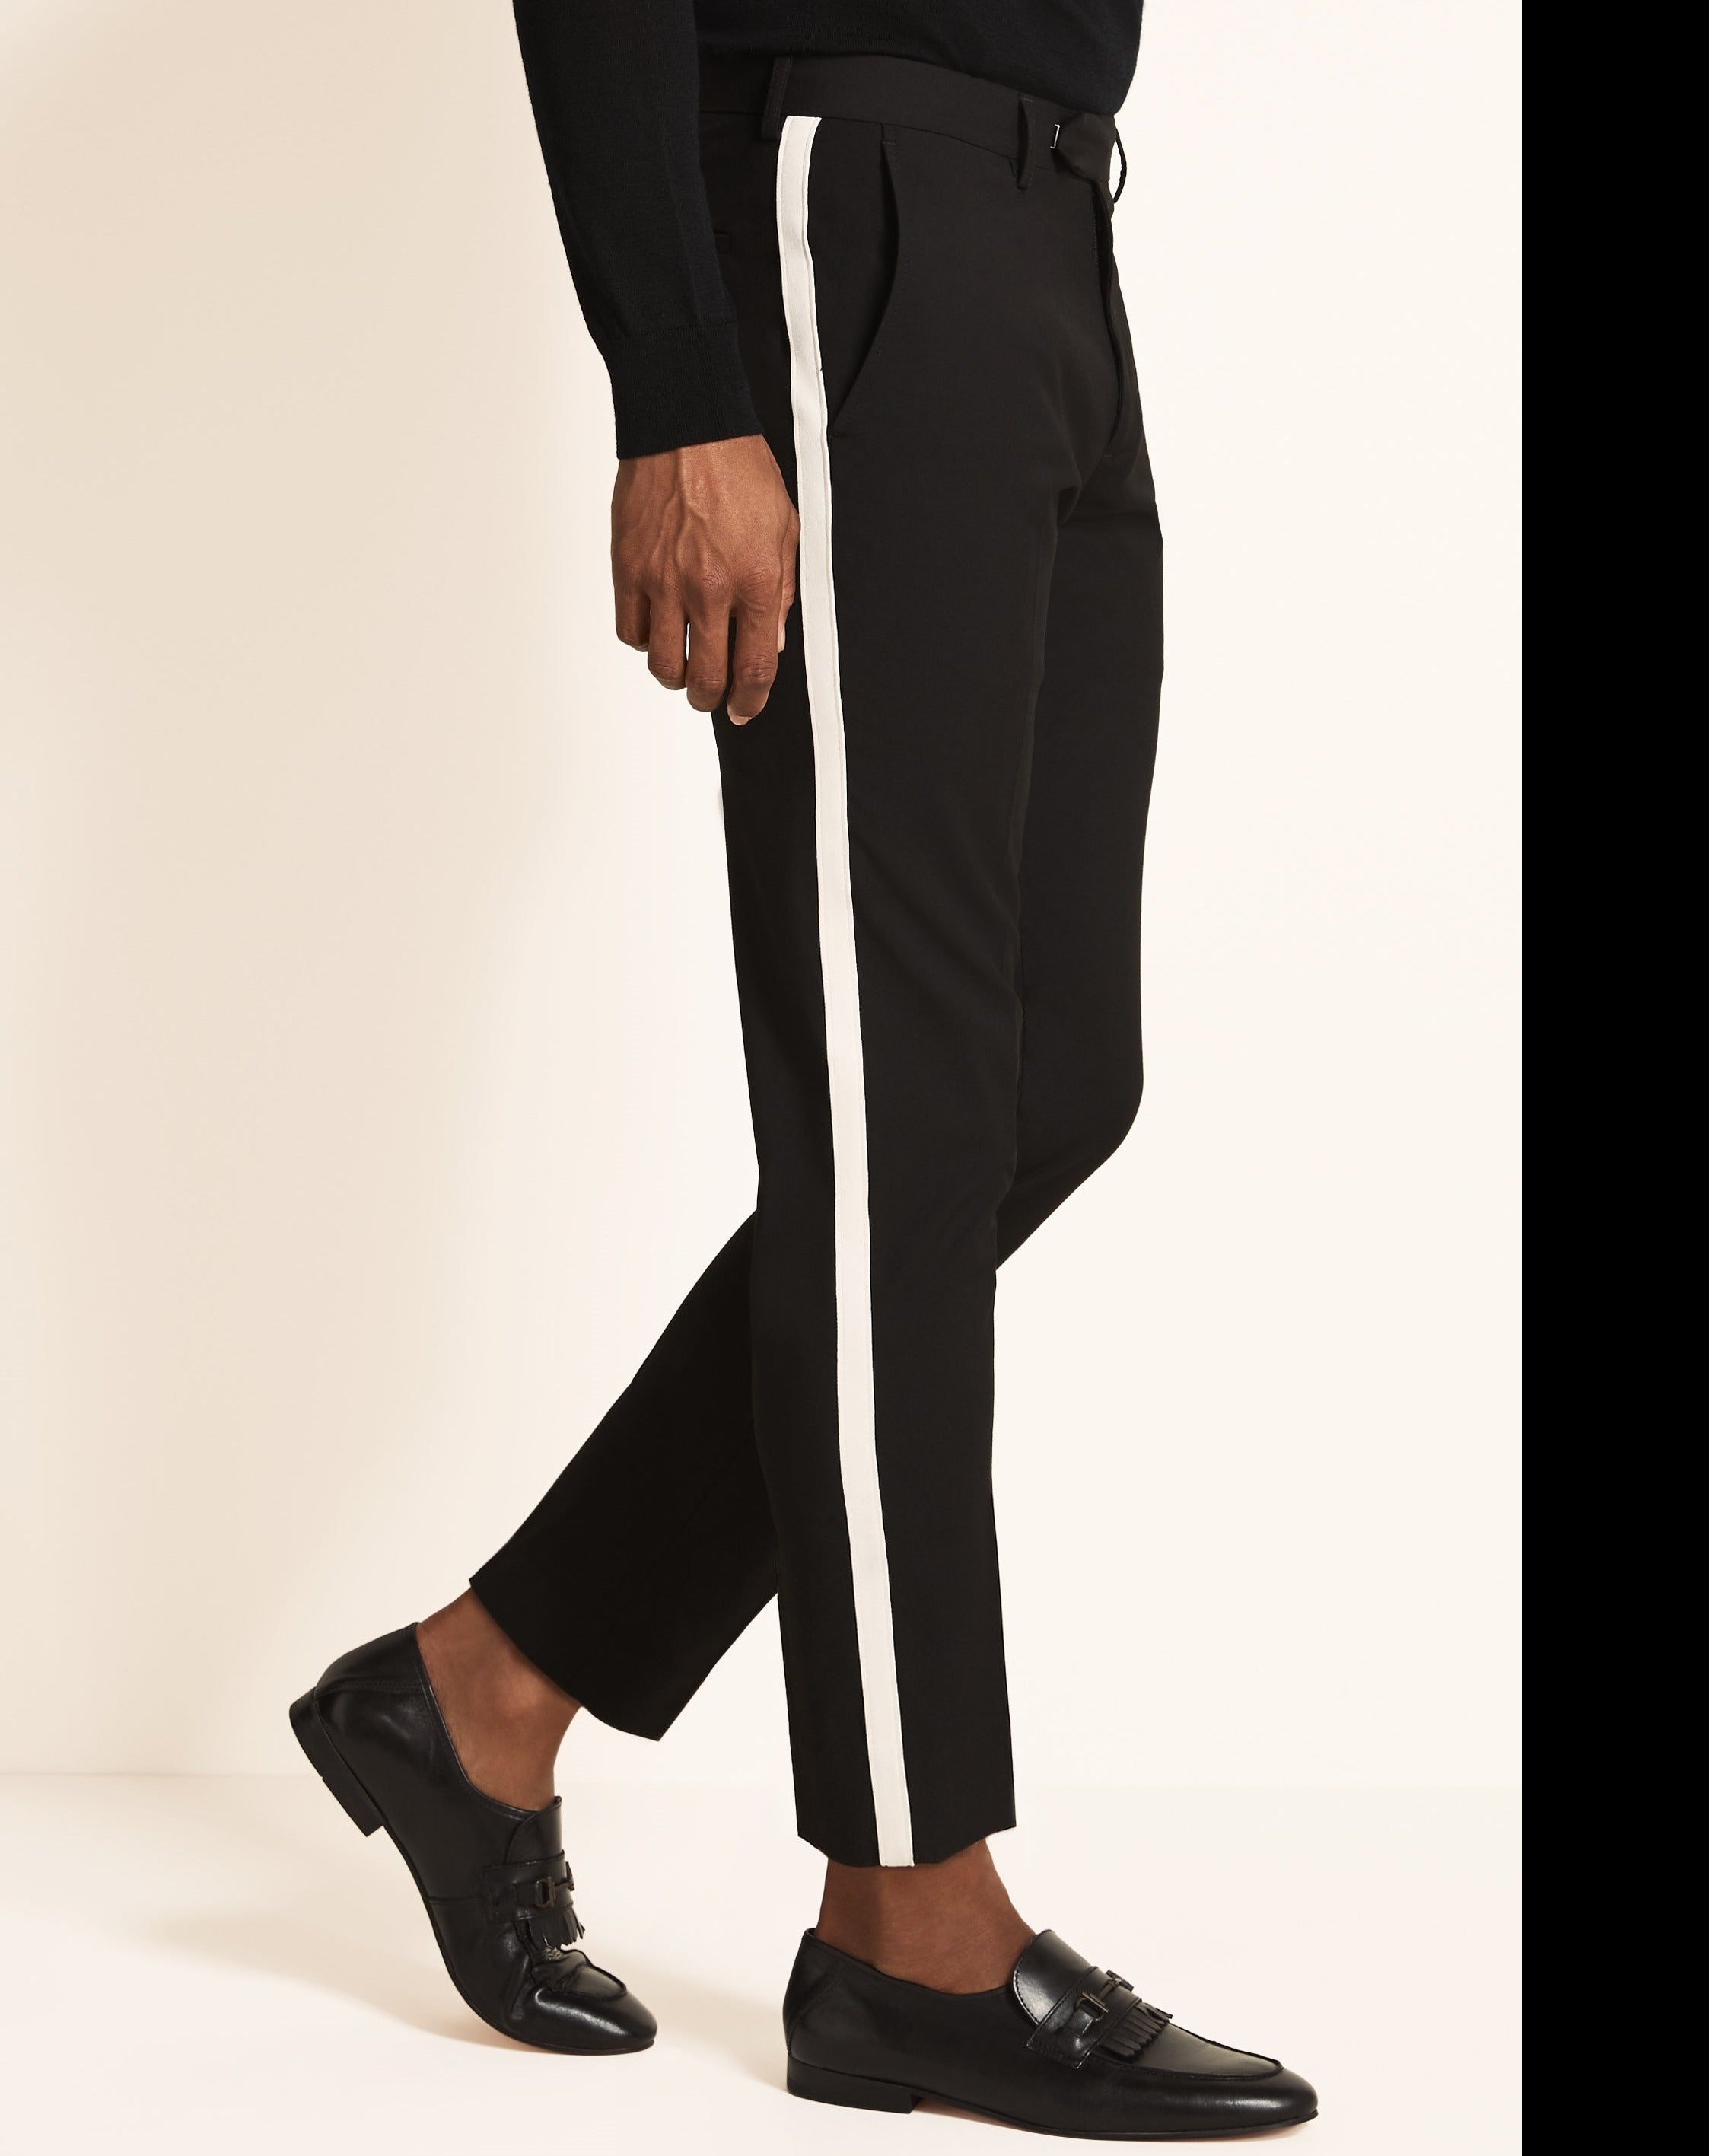 HESPERUS Juniors' Black w/ White Stitching Cargo Streetwear Wide Leg Pants  L | eBay